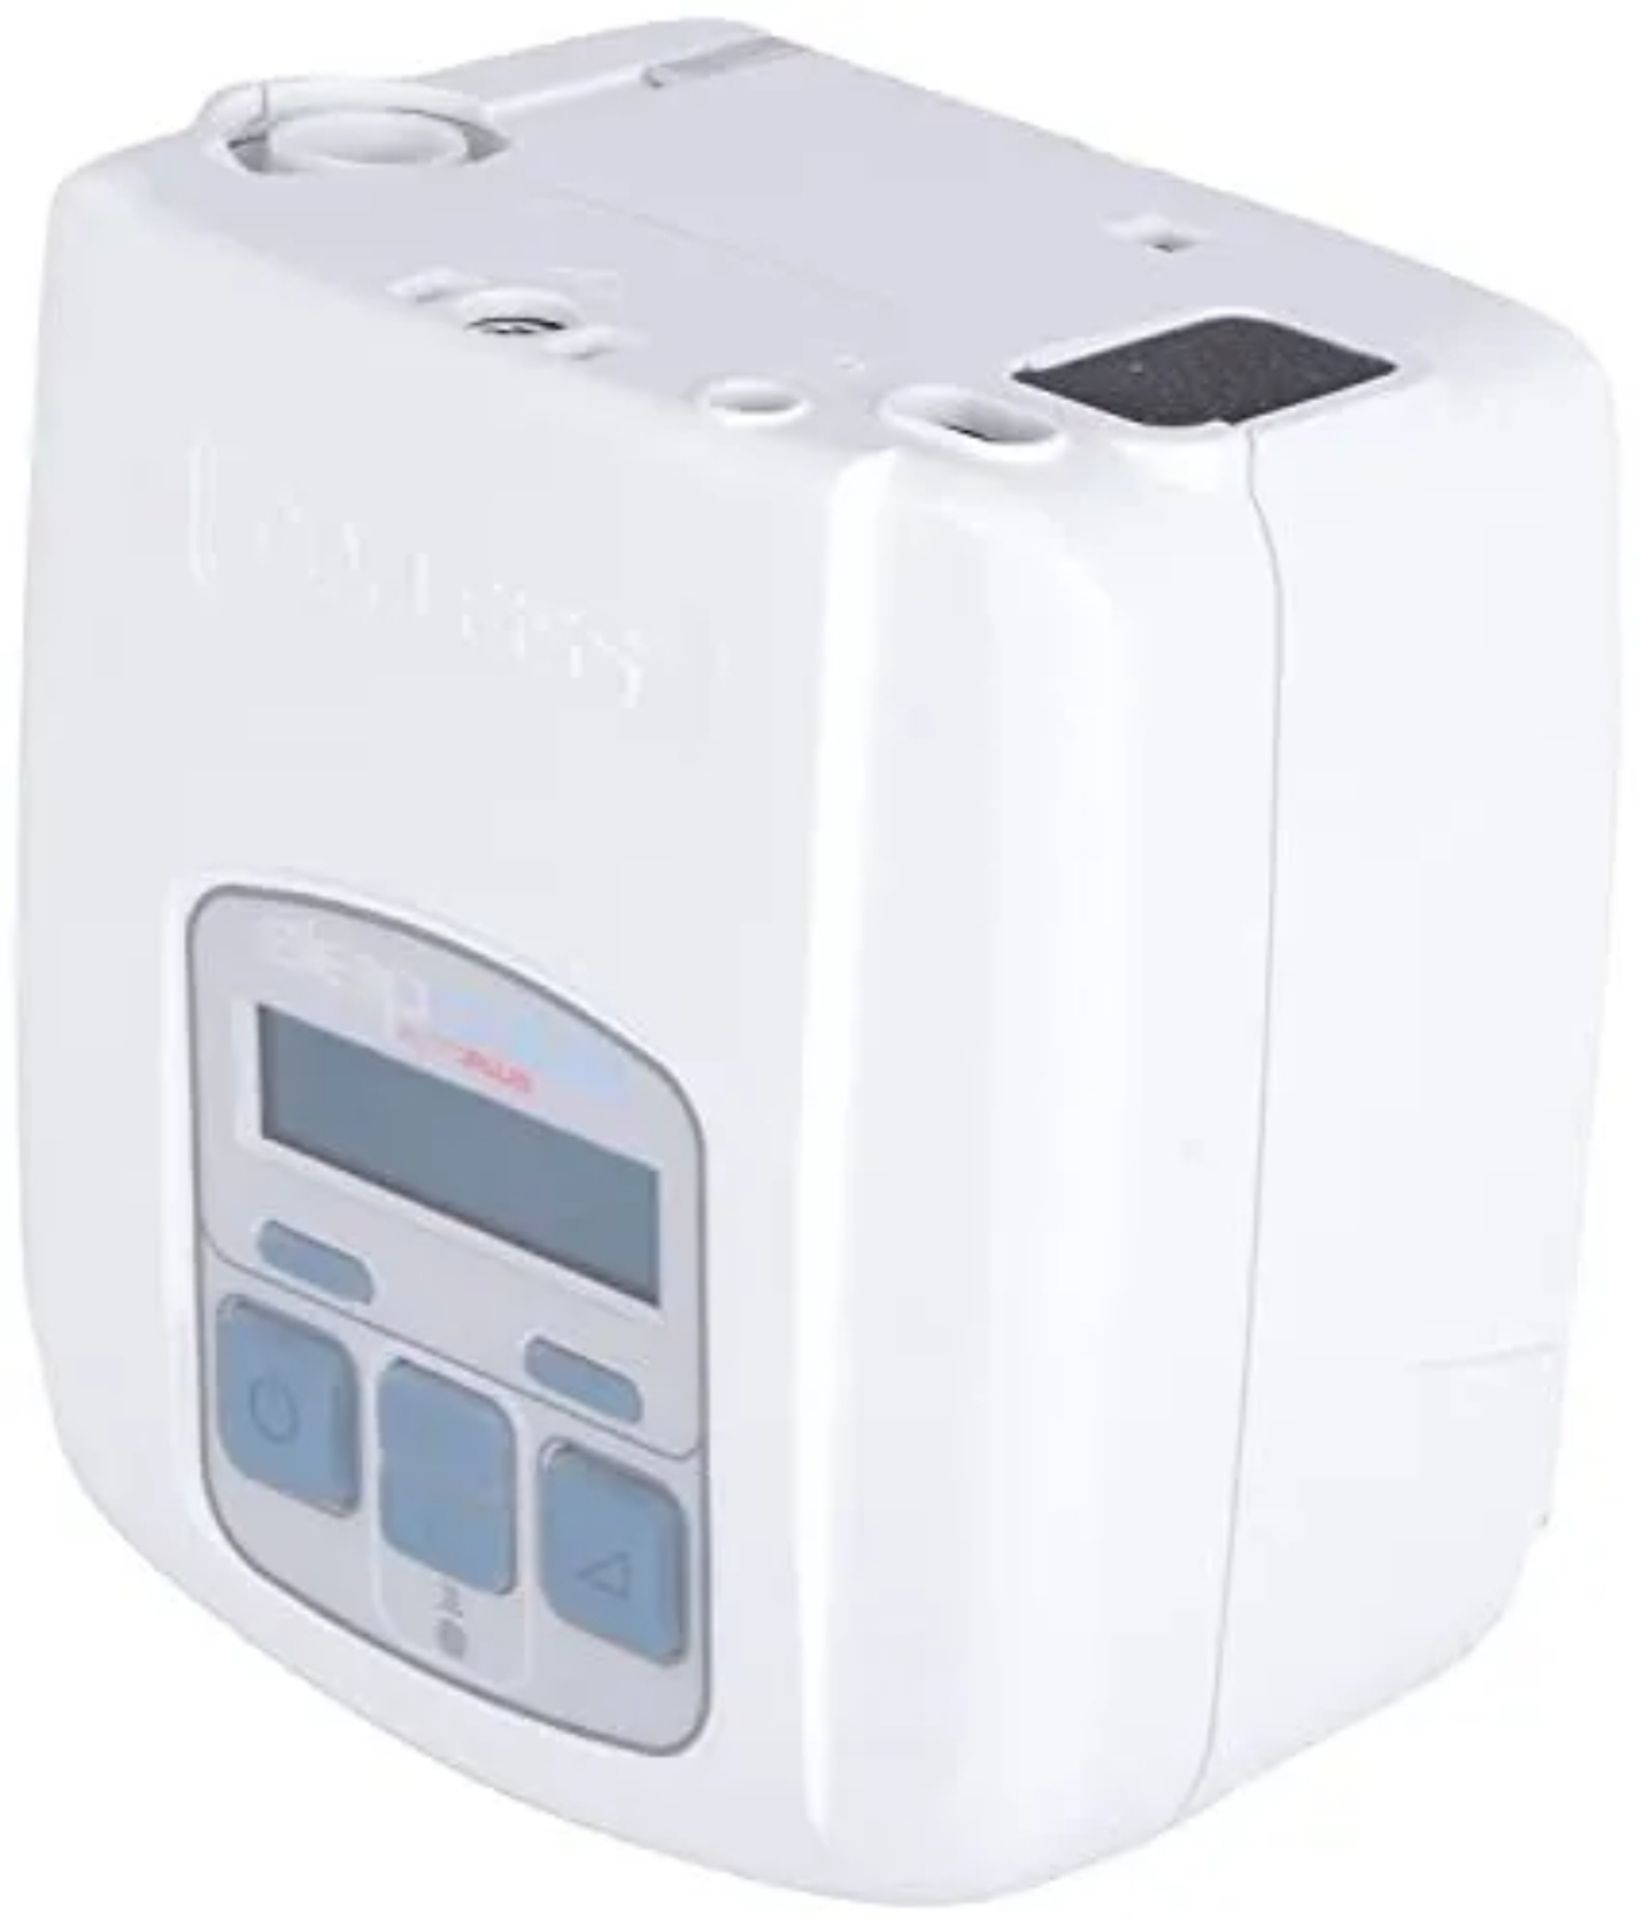 35 x SleepCube AutoAdjust Plus Automatic CPAP Machines. Responds to apnea, hypopnea and snoring. - Image 5 of 8